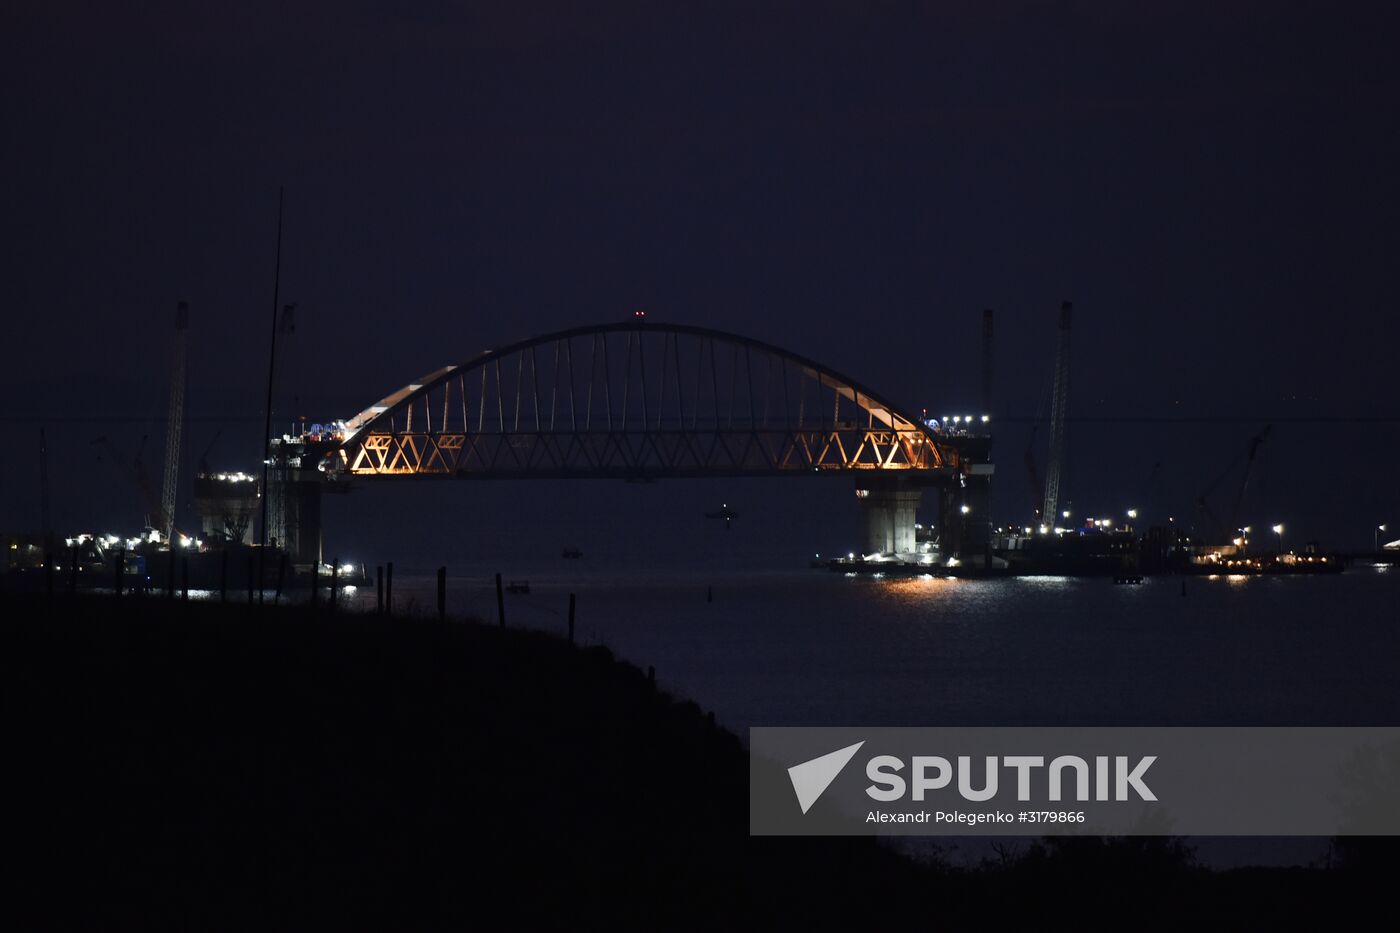 Building the Crimean Bridge